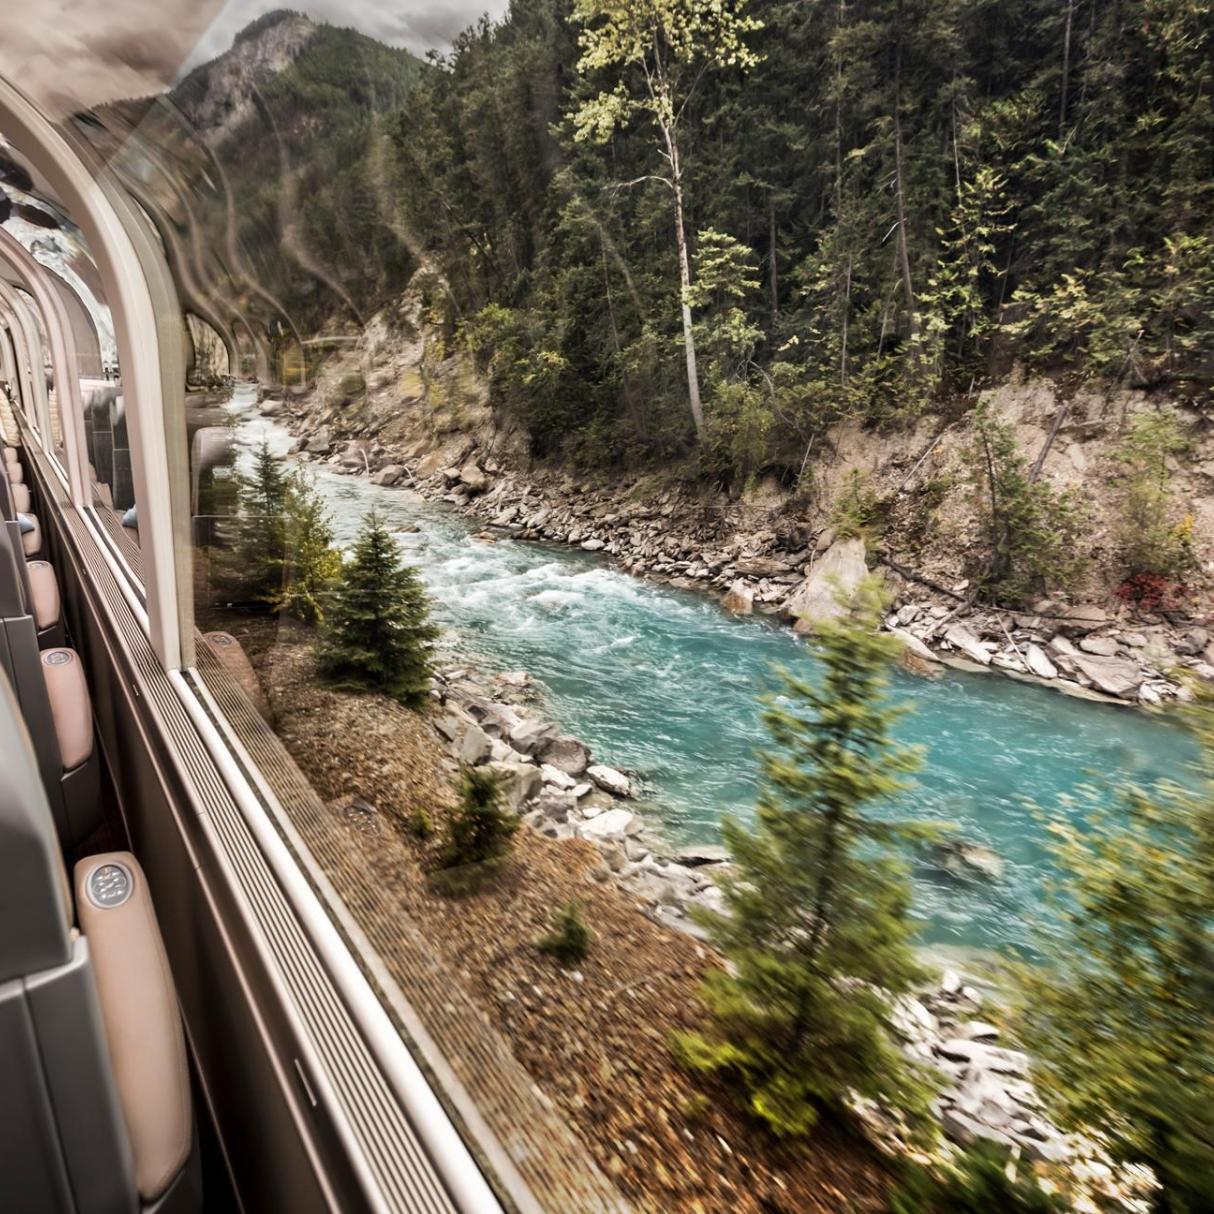 A river seen through the window of a train